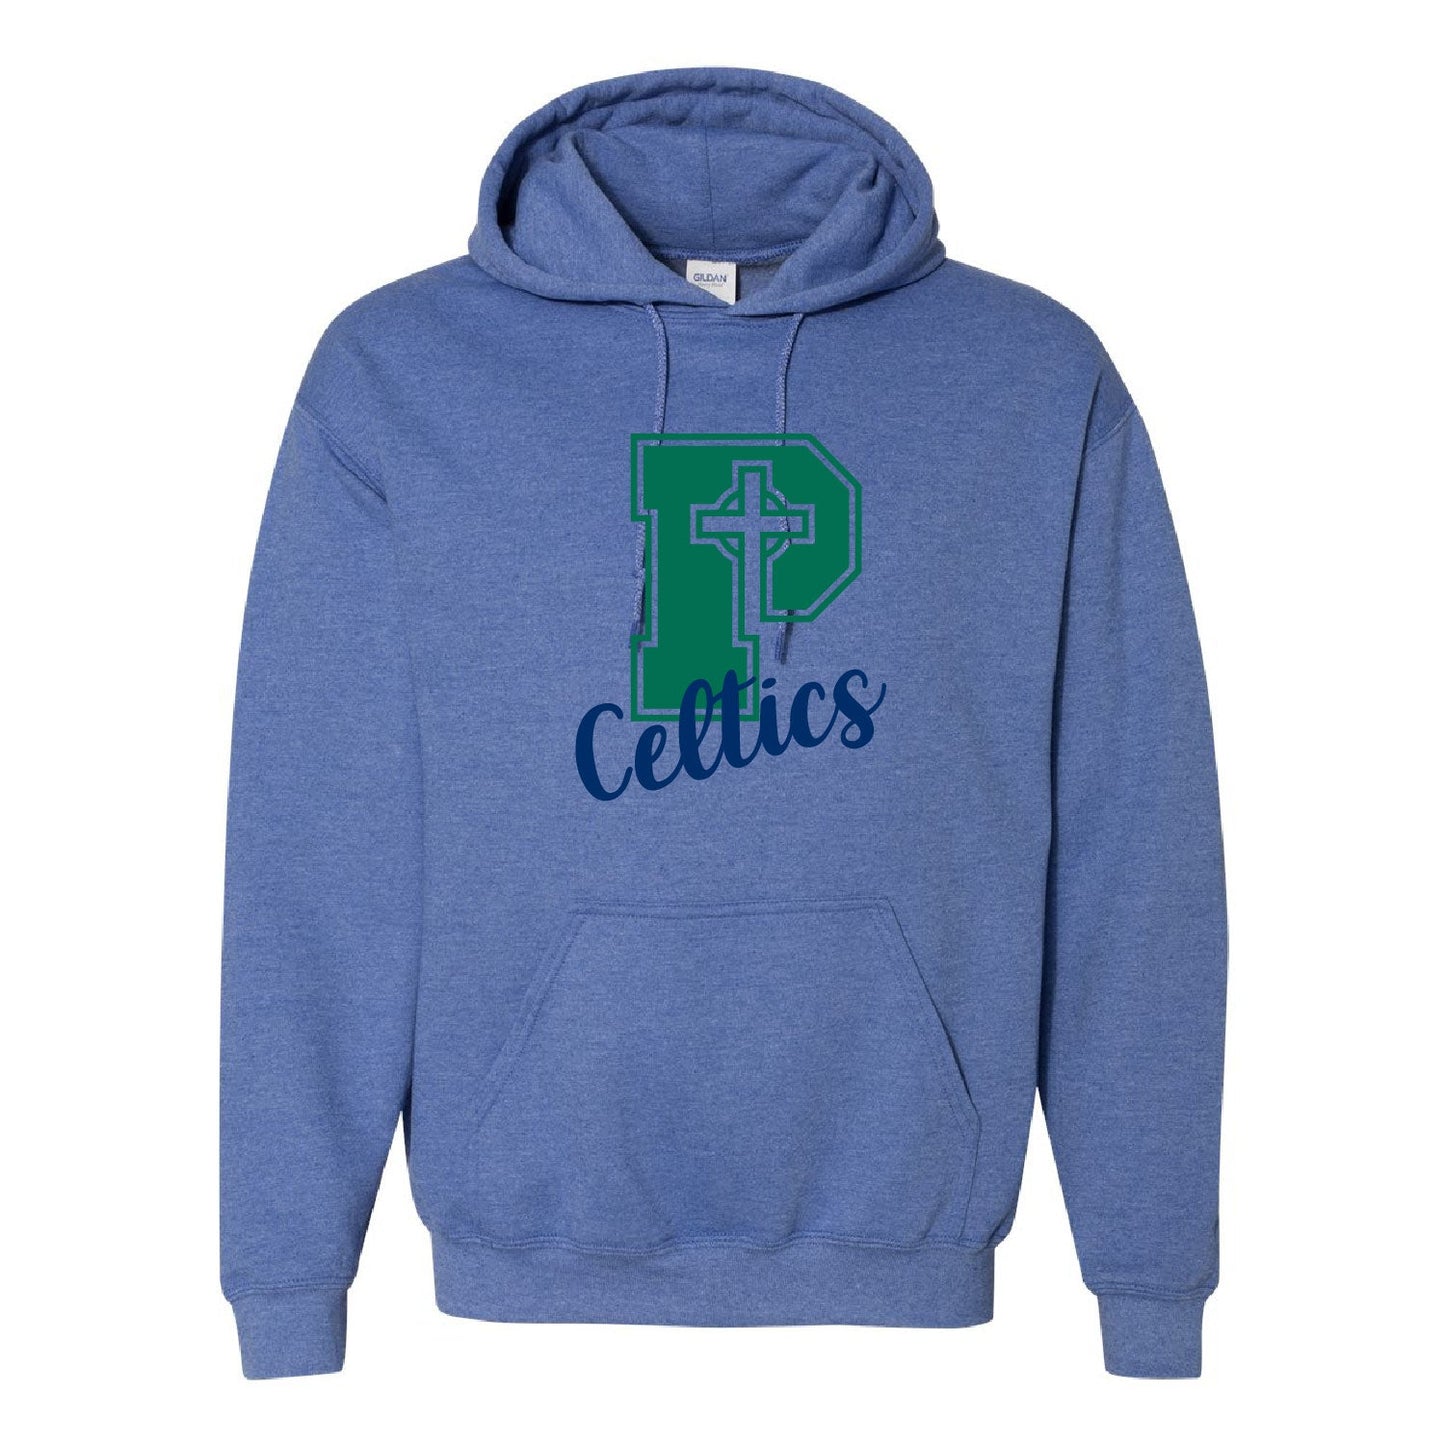 Hoodie Sweatshirt | Youth | Celtics P